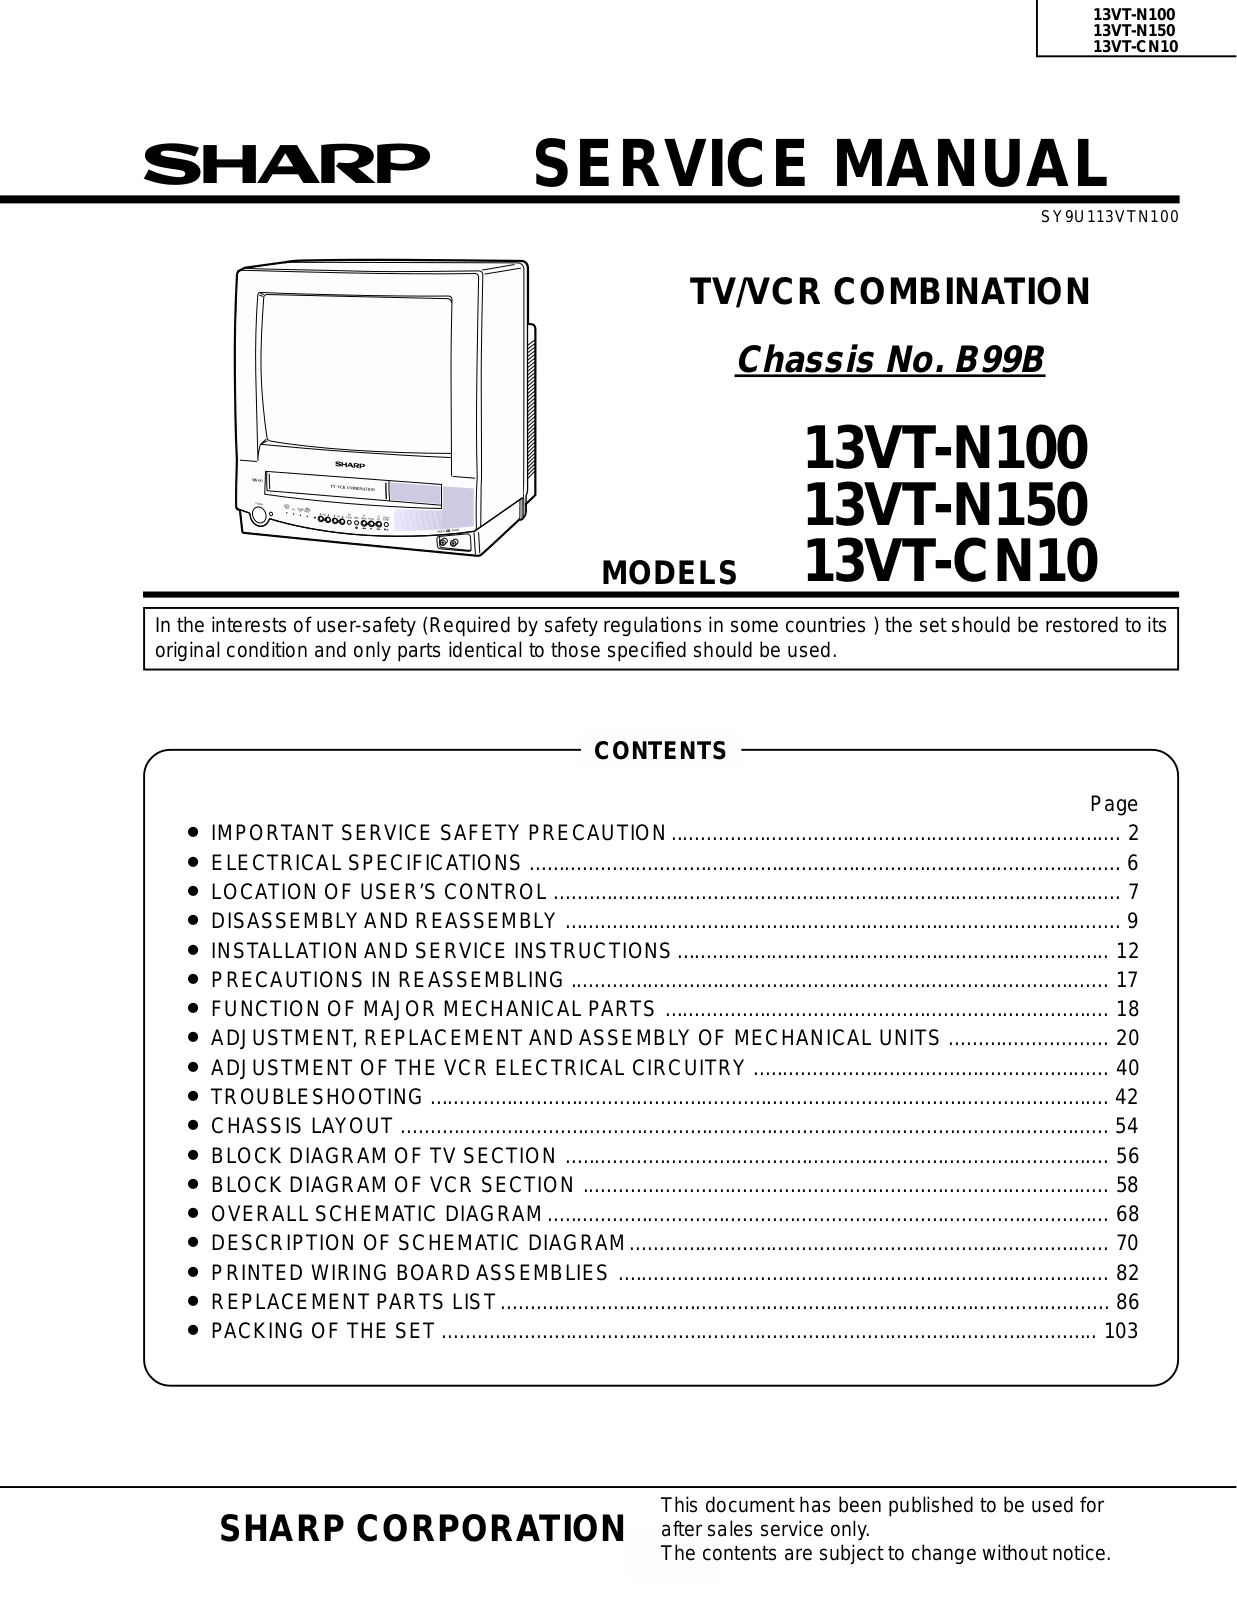 SHARP 13VT-N100, 13VT-N150, 13VT-CN10 Service Manual